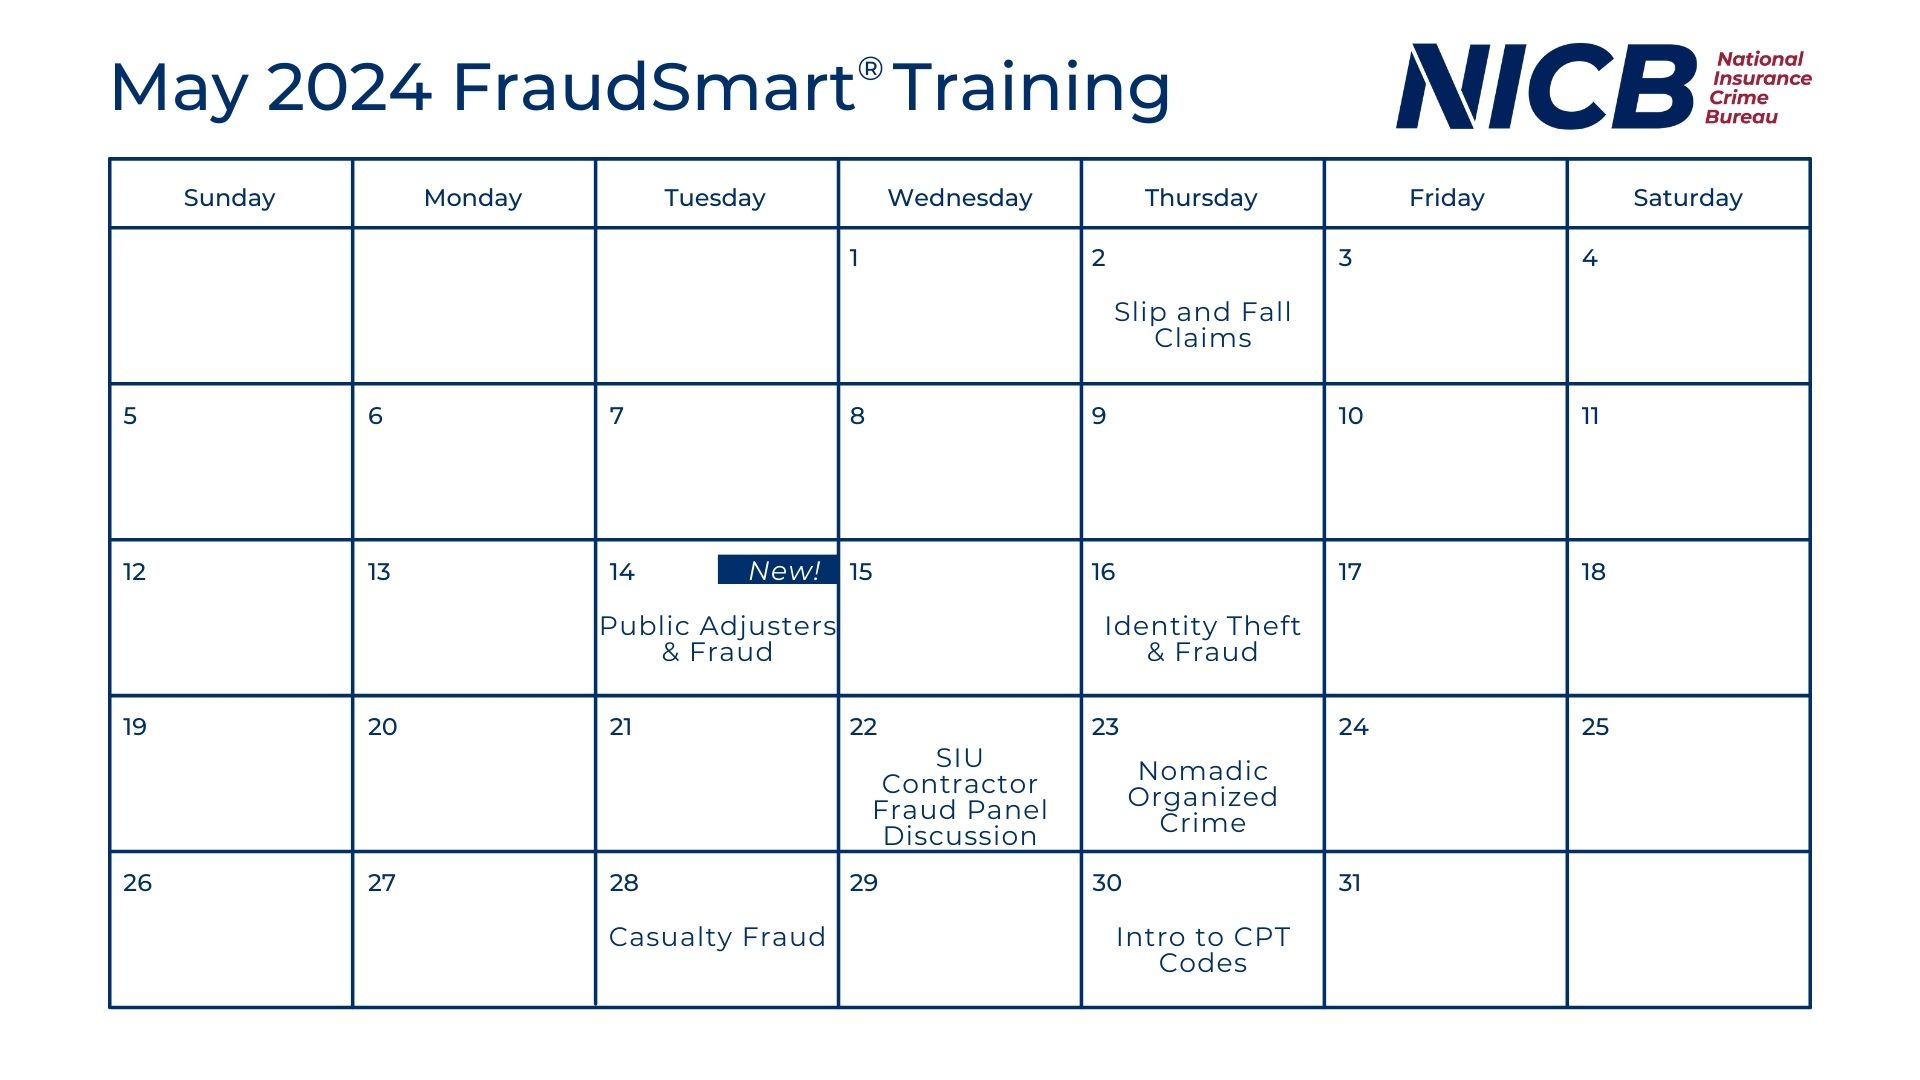 May 2024 FraudSmart Calendar